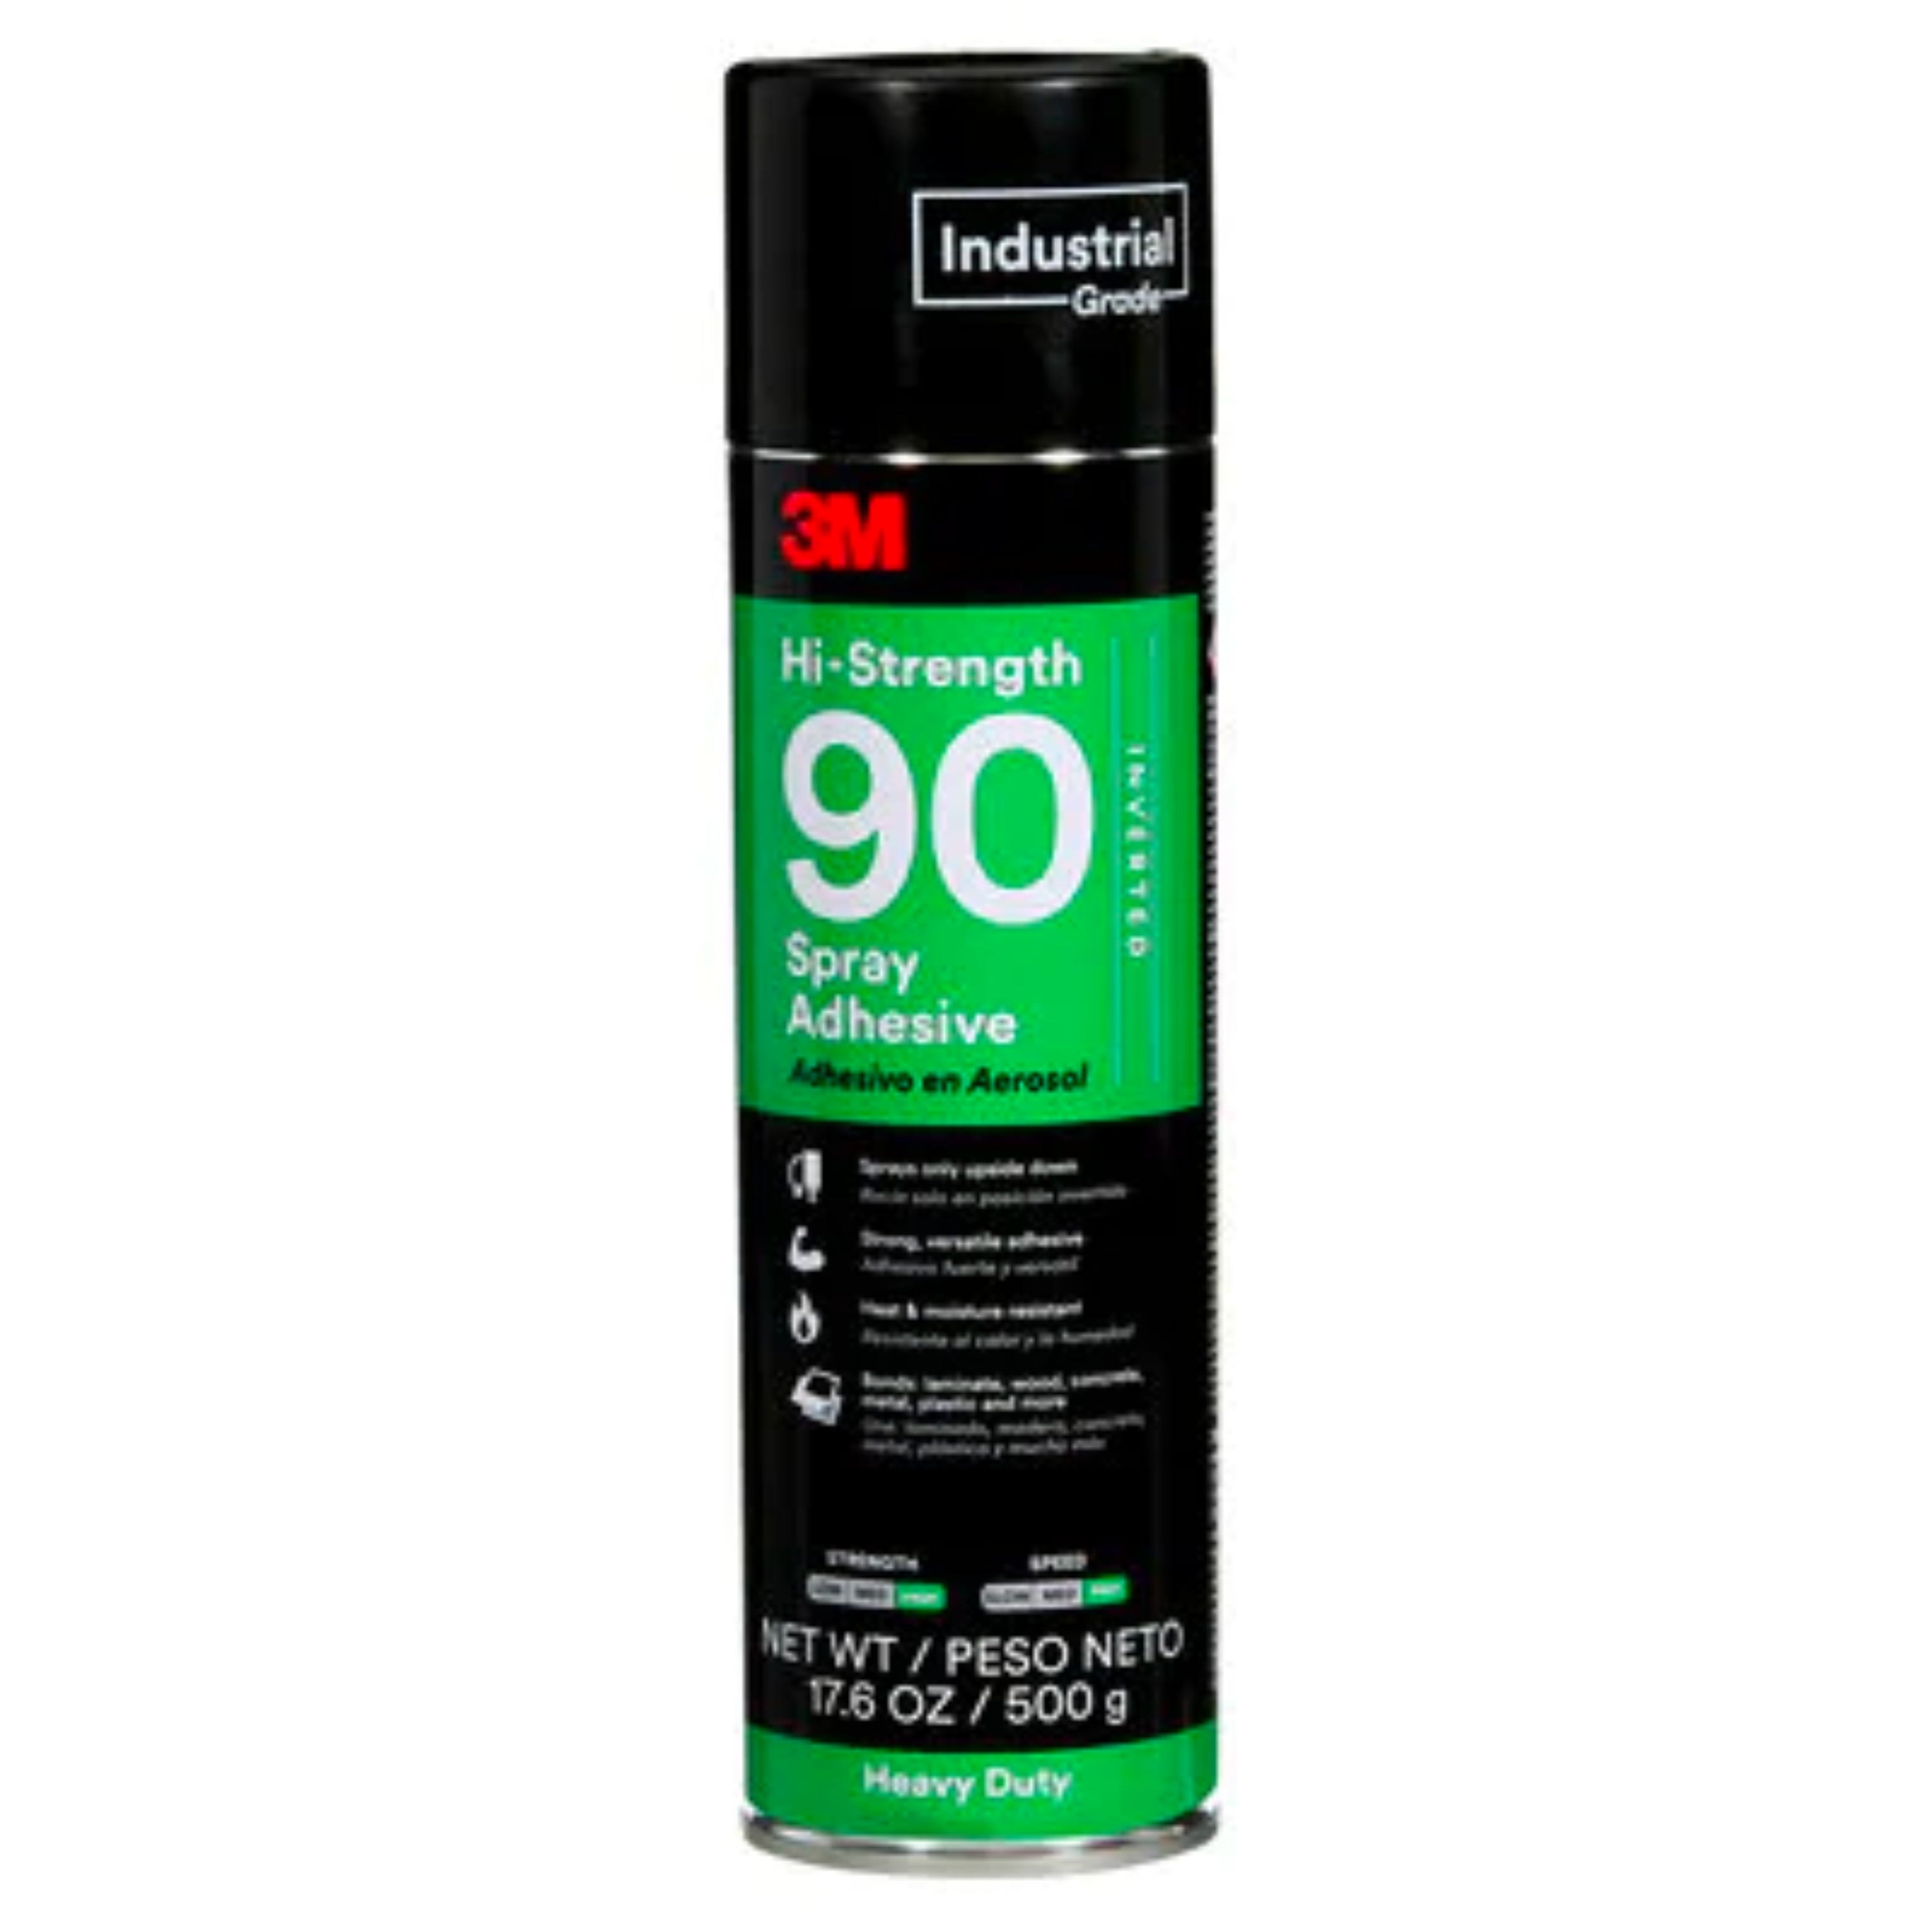  3M Hi-Strength 90 Spray Adhesive, 17.6 oz. : Industrial &  Scientific